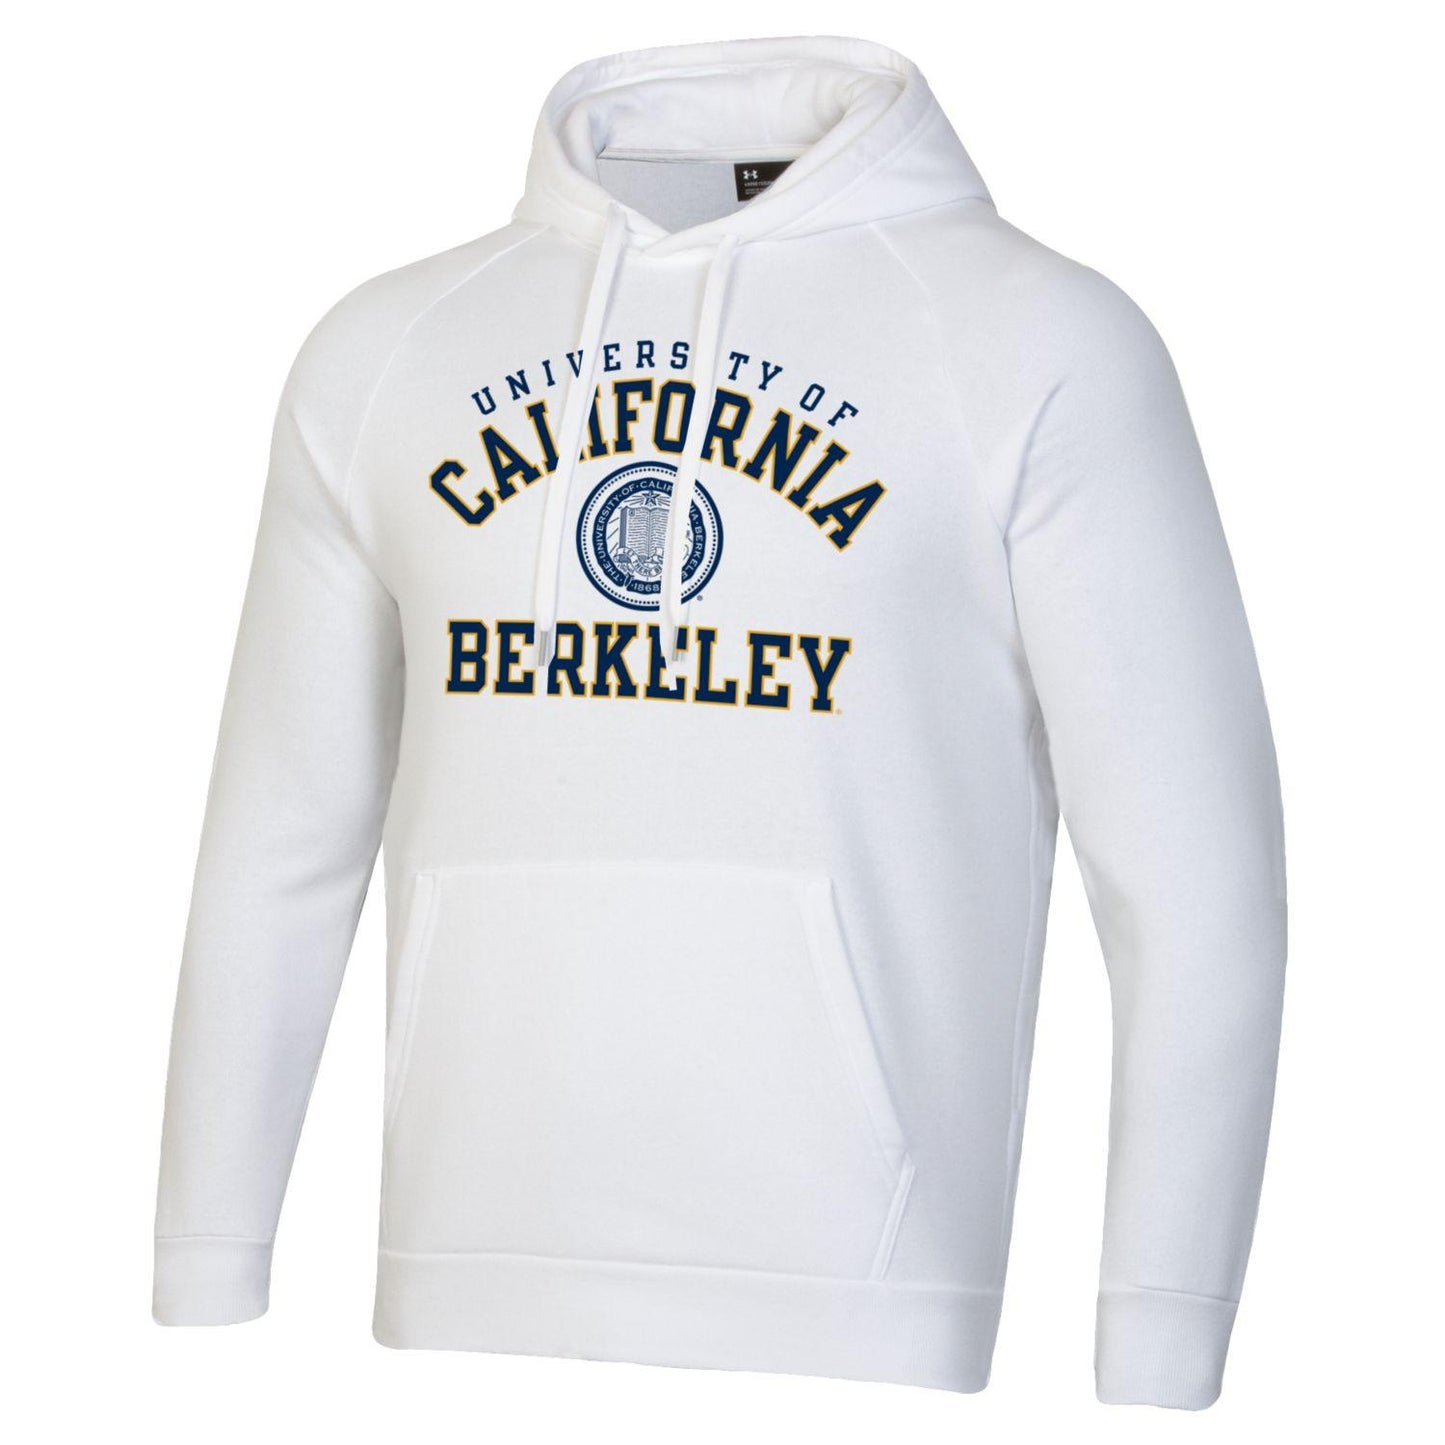 University of California Berkeley double arch Under Armour hoodie sweatshirt-White-Shop College Wear